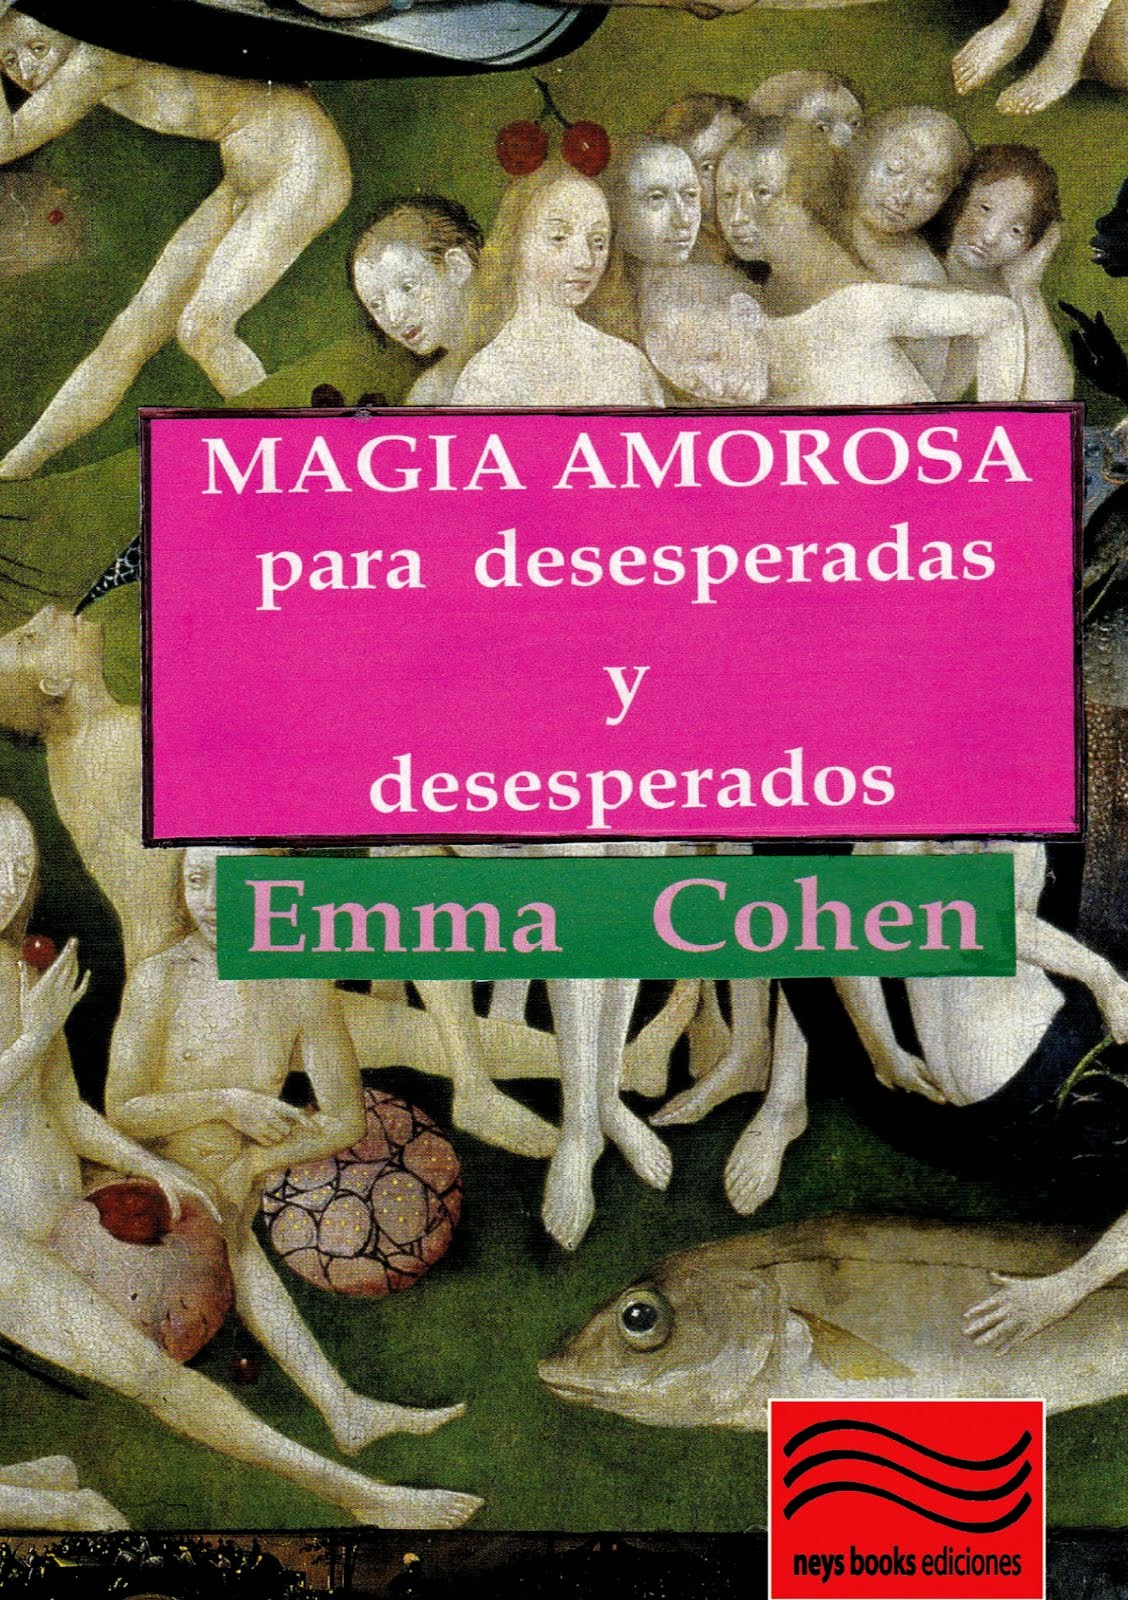 Emma Cohen